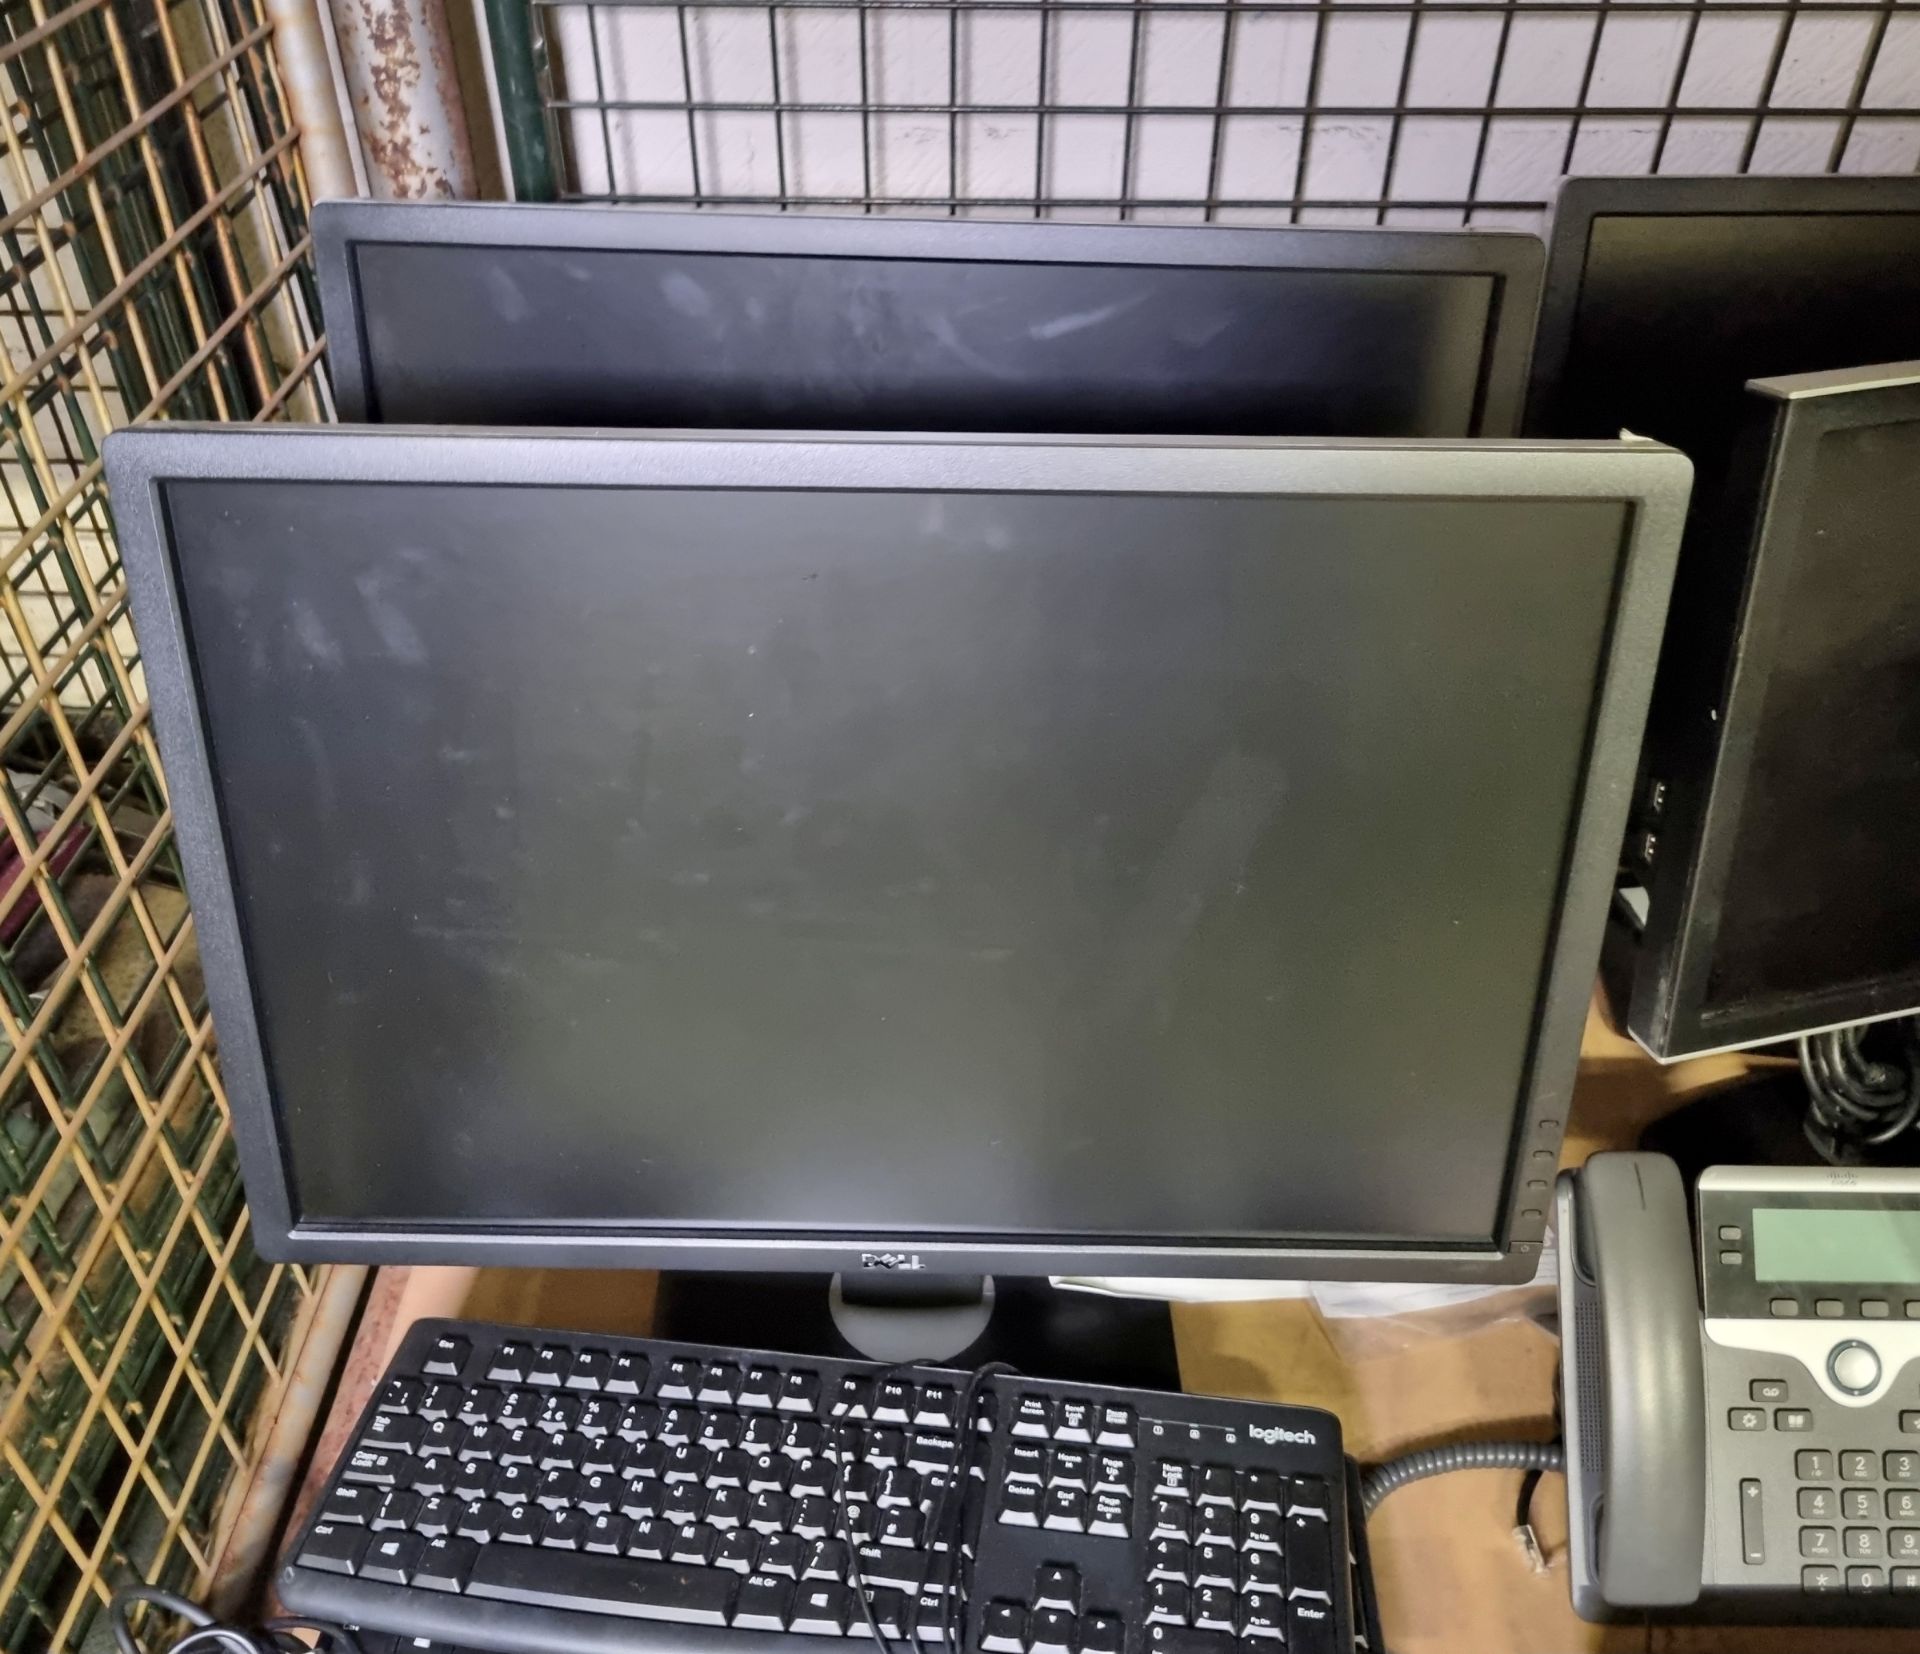 Office equipment - Dell PC monitors, keyboards & mouse, Dymo label printer, paper slicer, shredder - Image 6 of 7